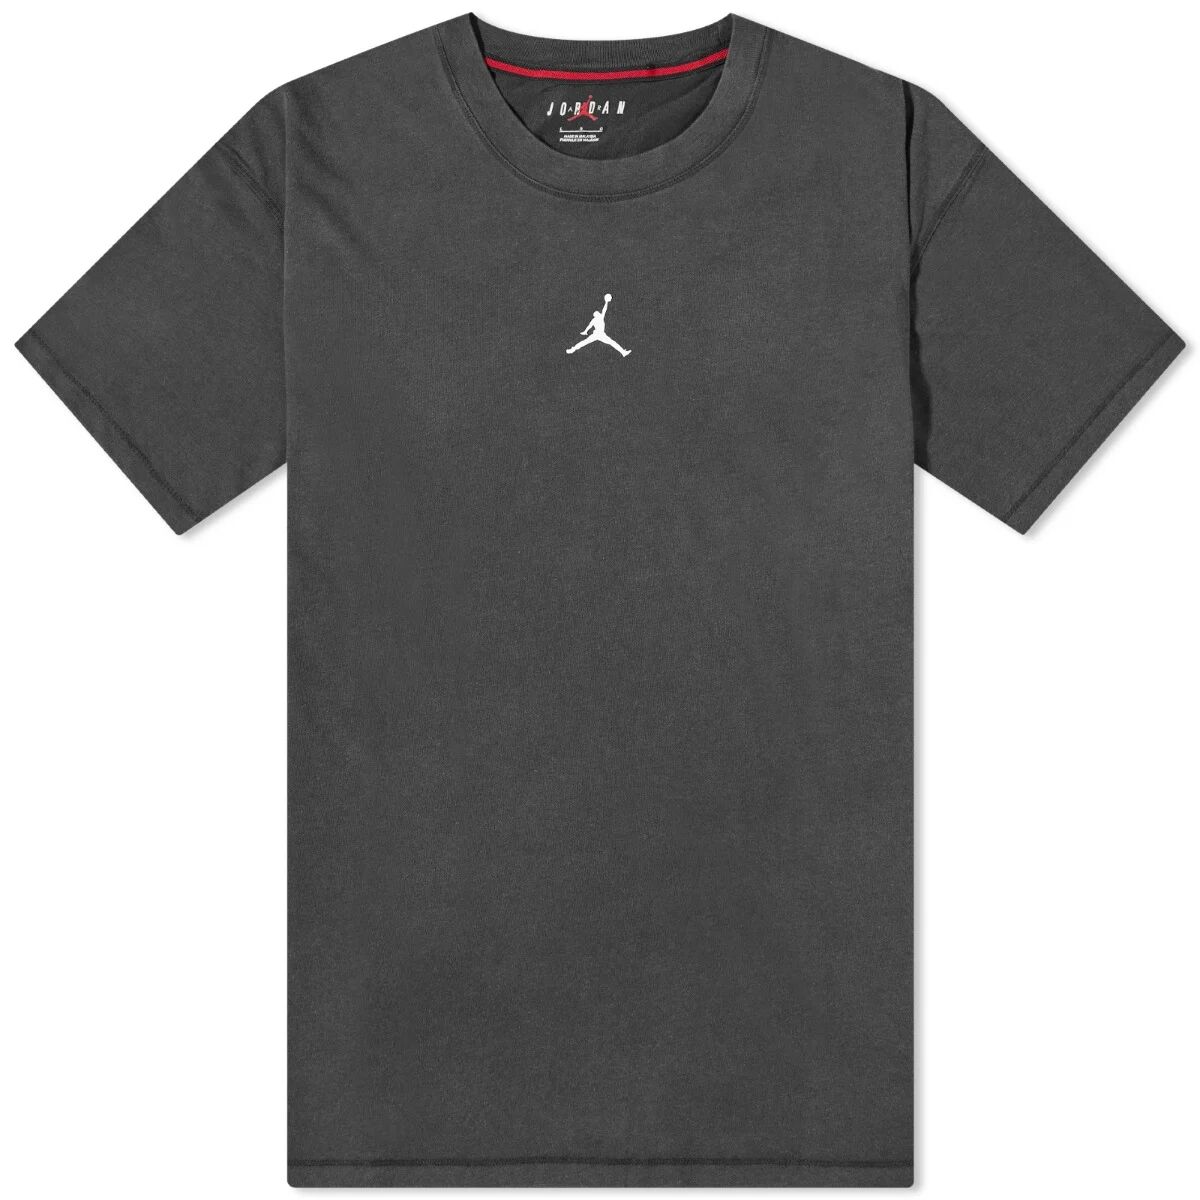 Air Jordan Men's Washed Jumpman T-Shirt in Black/White, Size Small